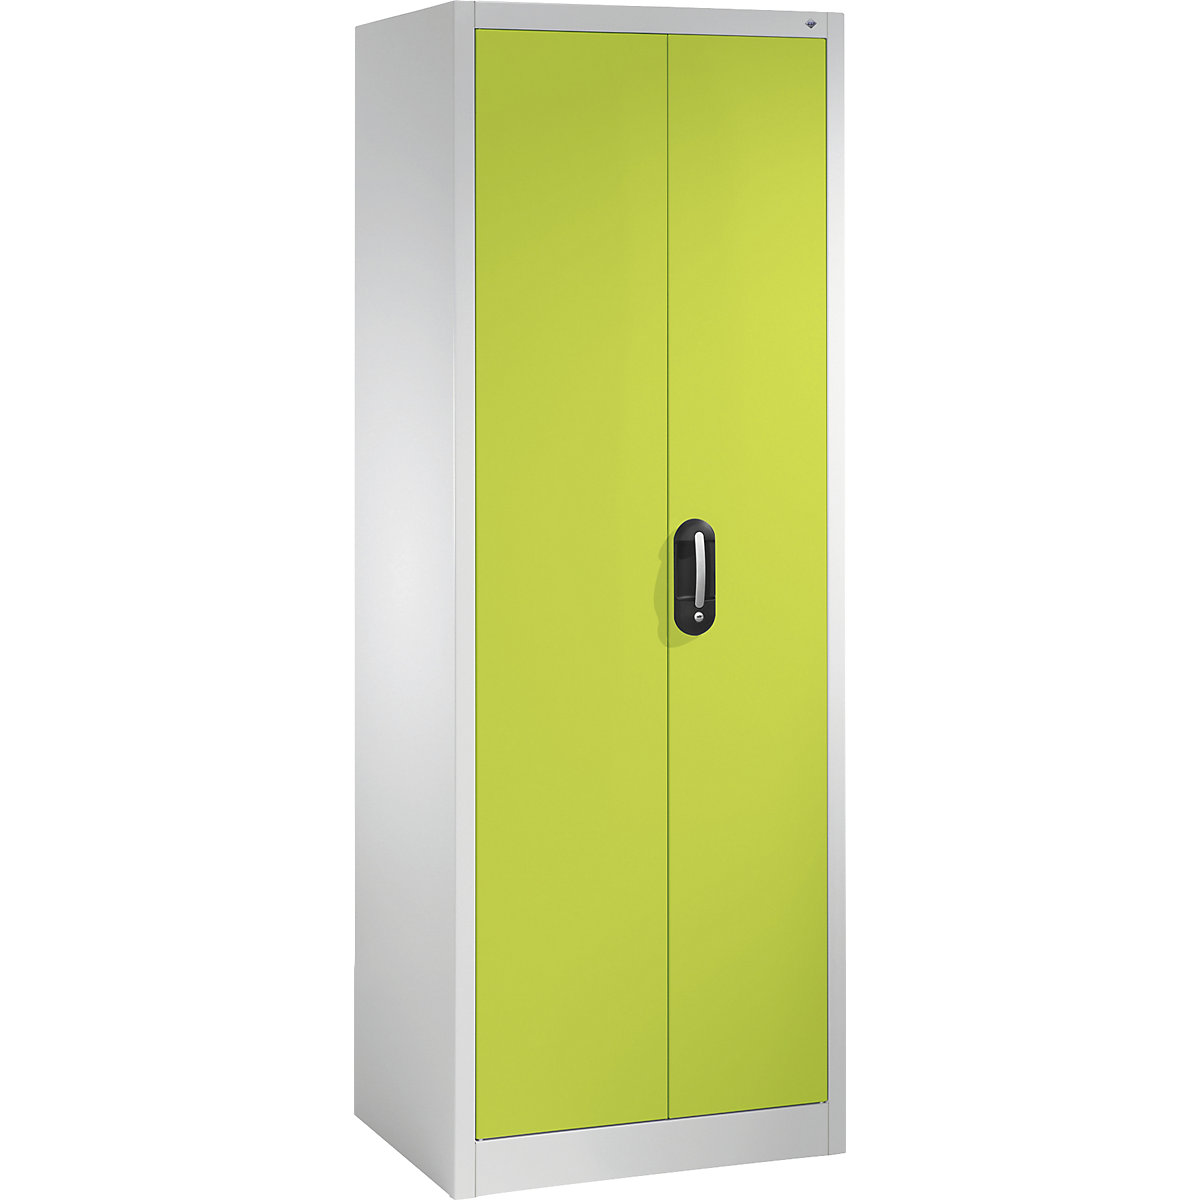 C+P – ACURADO universal cupboard, WxD 700 x 500 mm, light grey / viridian green